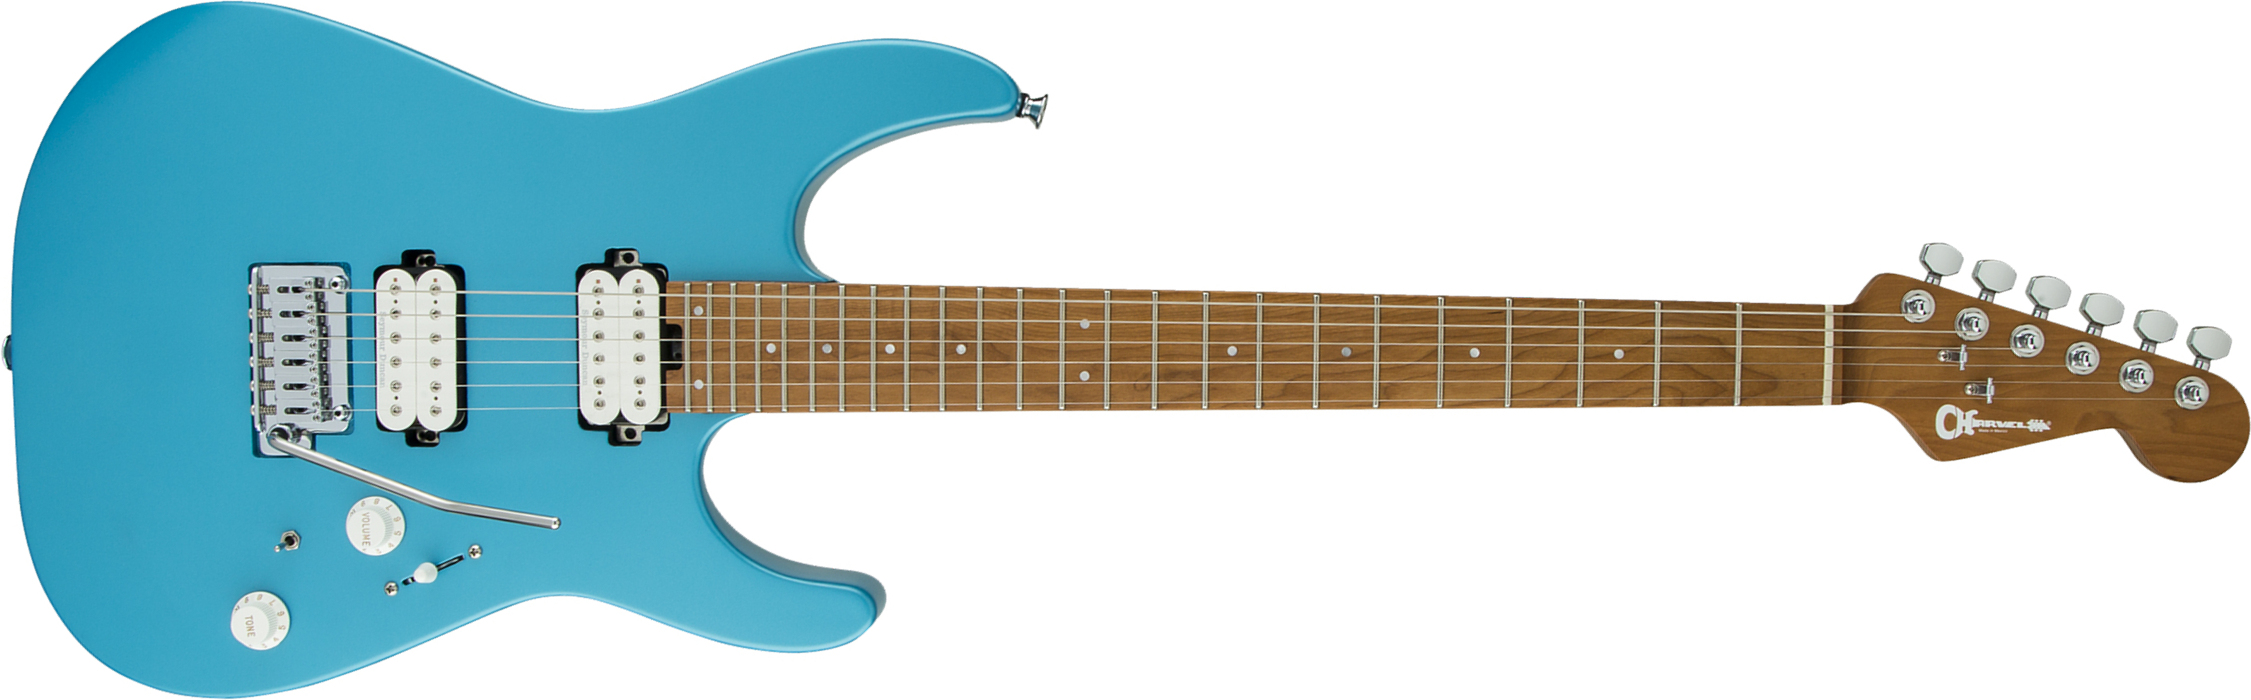 Charvel Pro-mod Dk24 Hh 2pt Cm Seymour Duncan Trem Mn - Matte Blue Frost - Elektrische gitaar in Str-vorm - Main picture